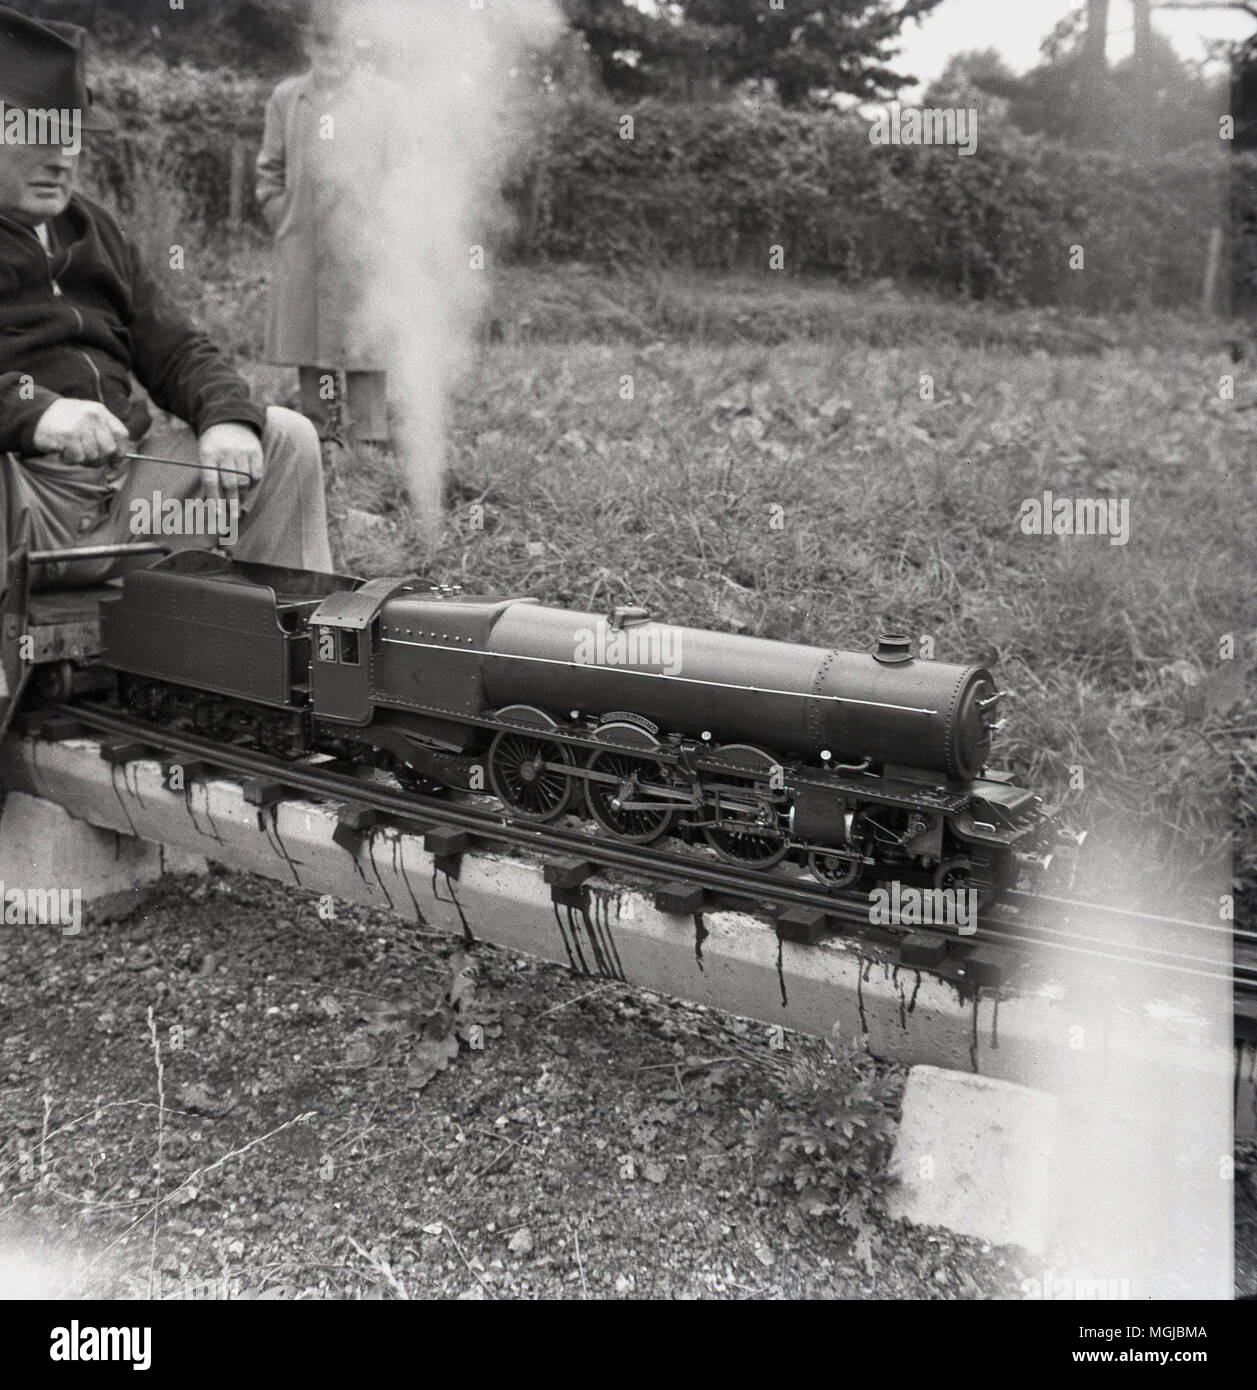 1950s, históricos, macho adulto amteur entusiastas de ferrocarril con un tren de vapor en un trenecito, Inglaterra, Reino Unido. Foto de stock